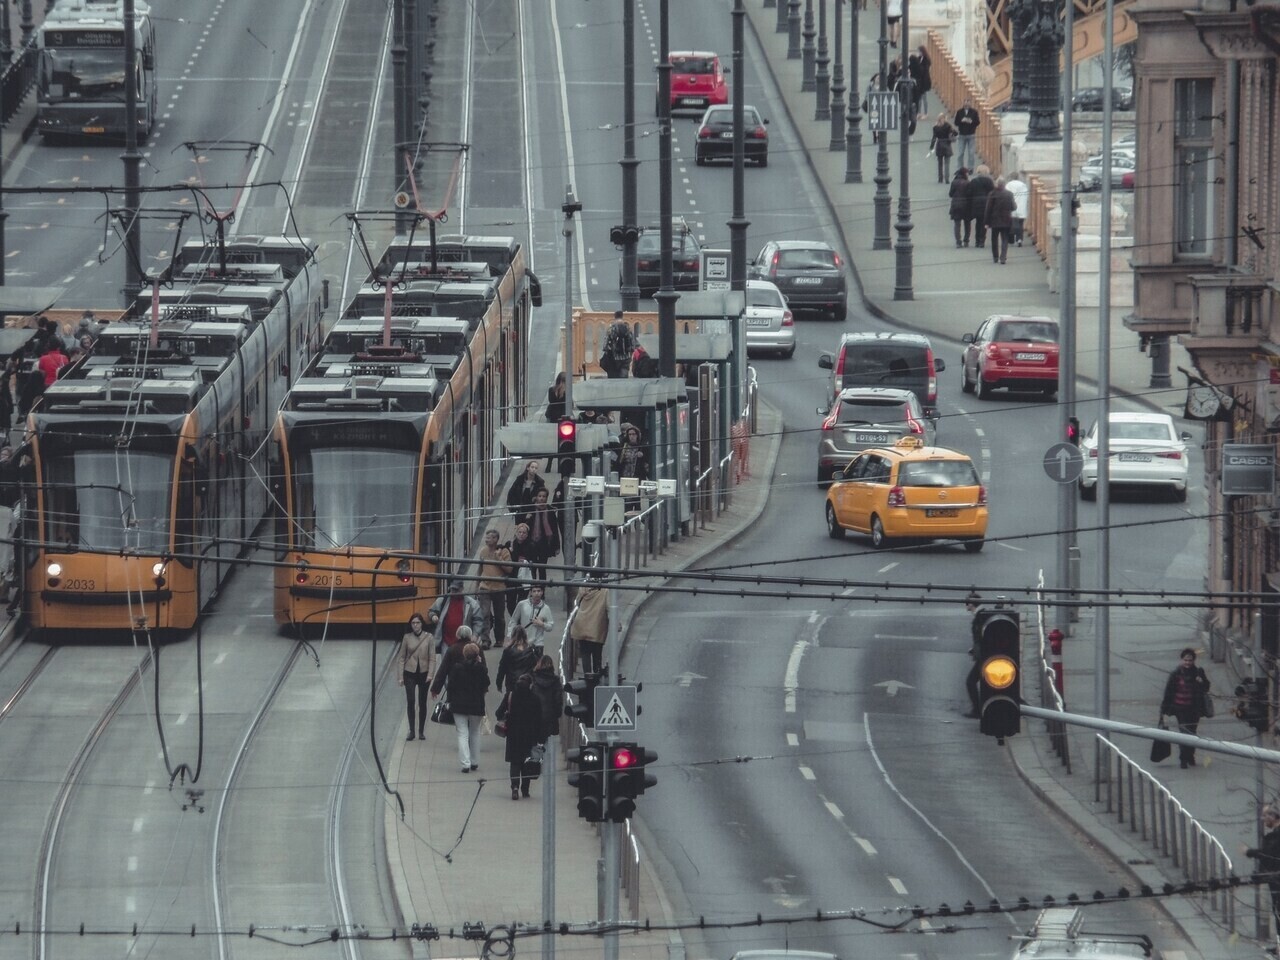 budapest bkv bkk tram transport